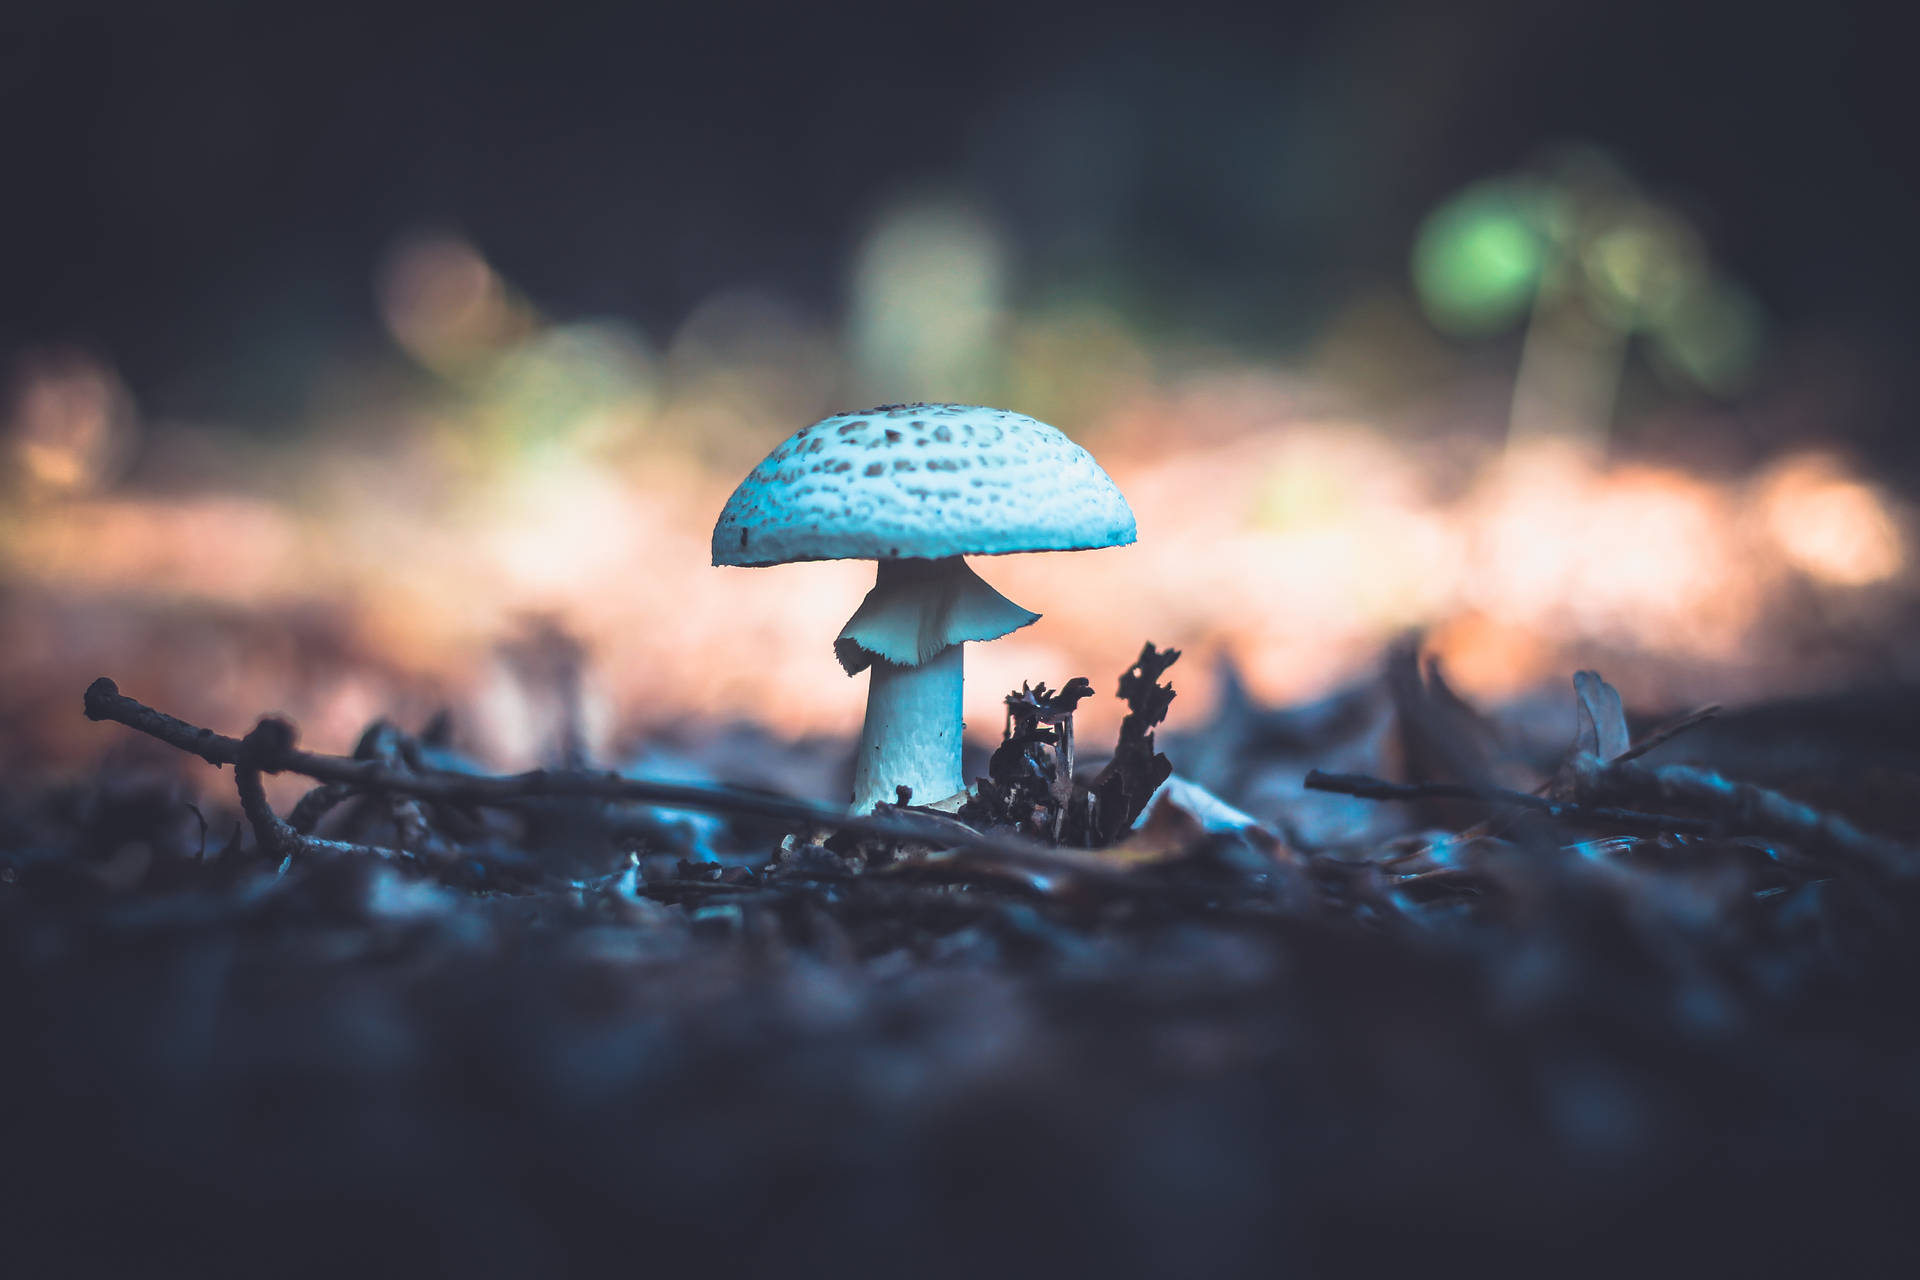 Cute Mushroom Pictures Wallpaper